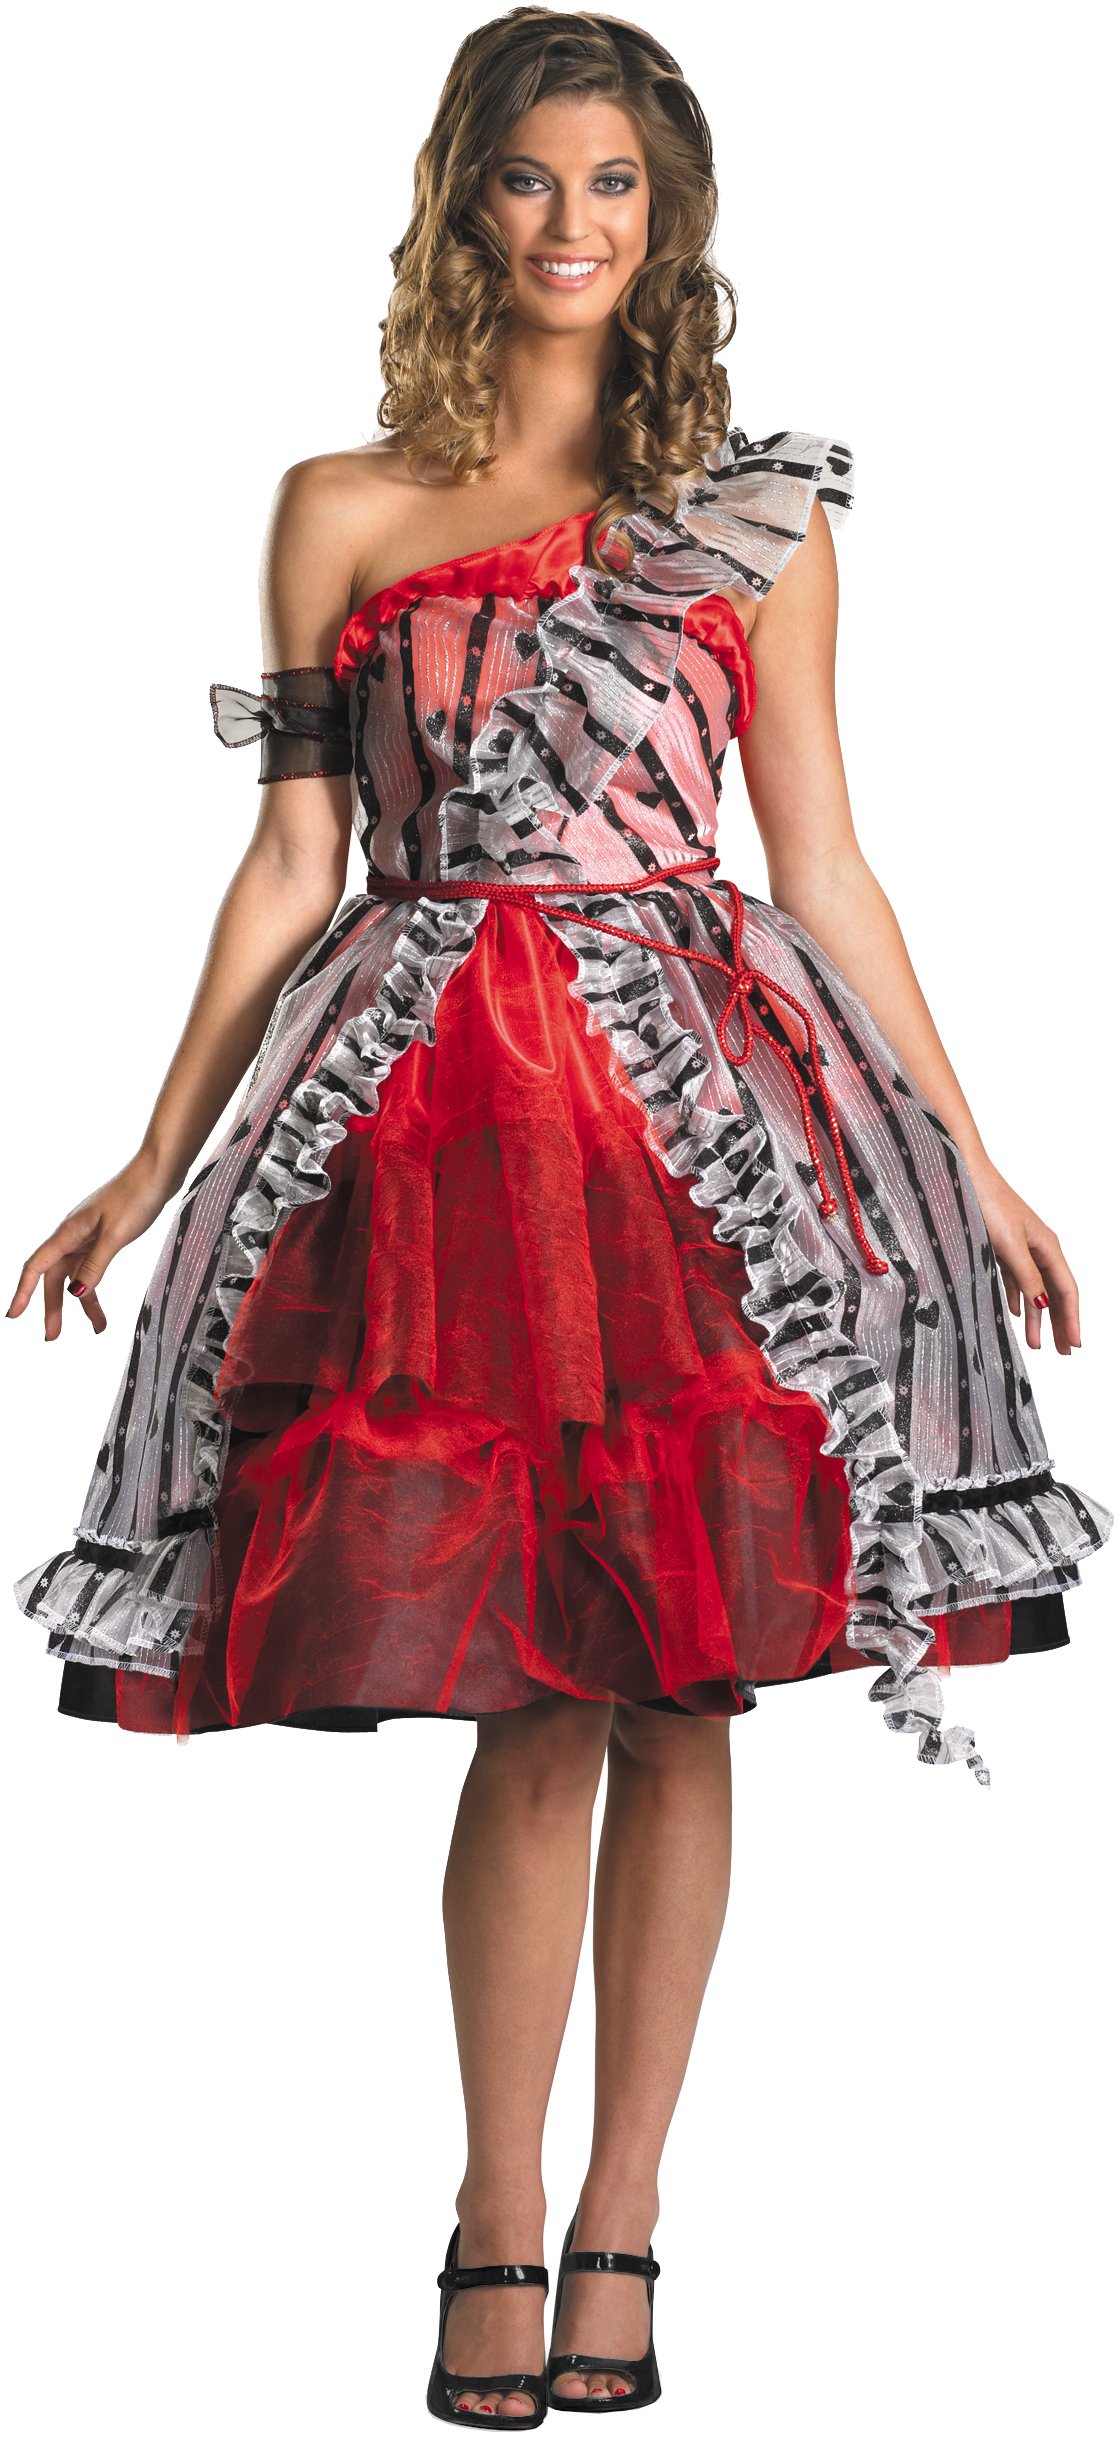 Alice In Wonderland - Alice Red Court Dress Adult Costume